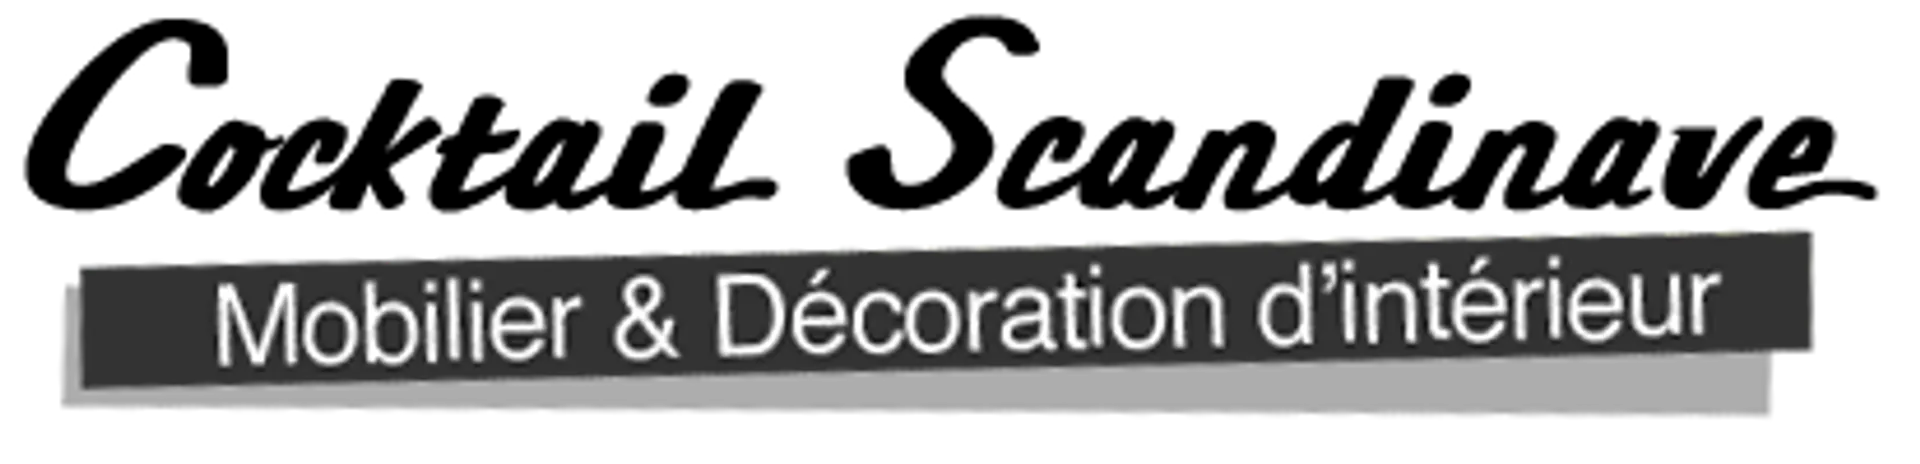 COCKTAIL SCANDINAVE logo du catalogue